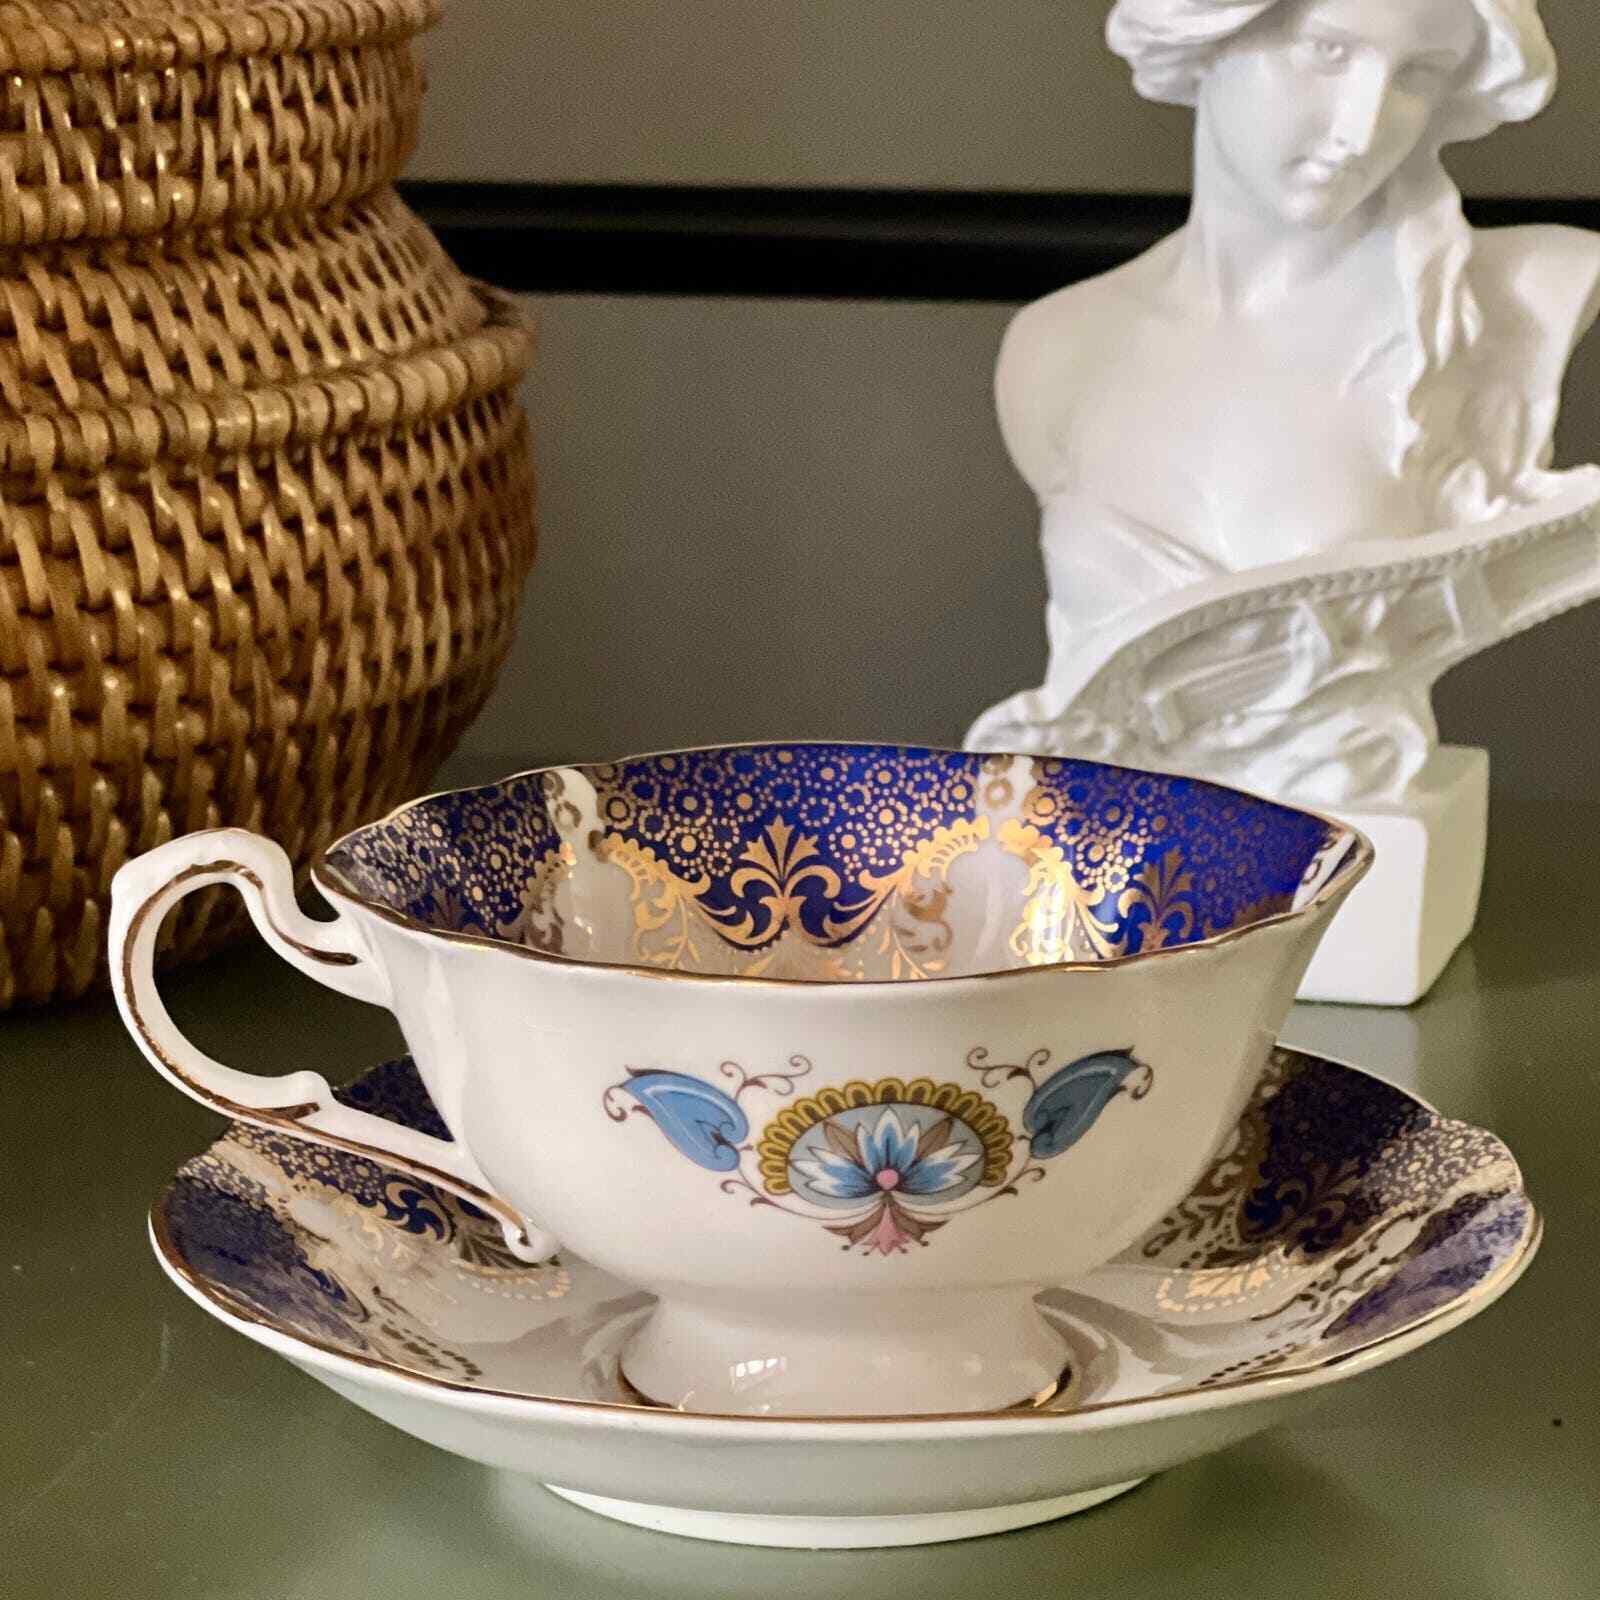 Paragon Royal Blue Teacup & Saucer  Collectible English Porcelain Vintage TeaCup